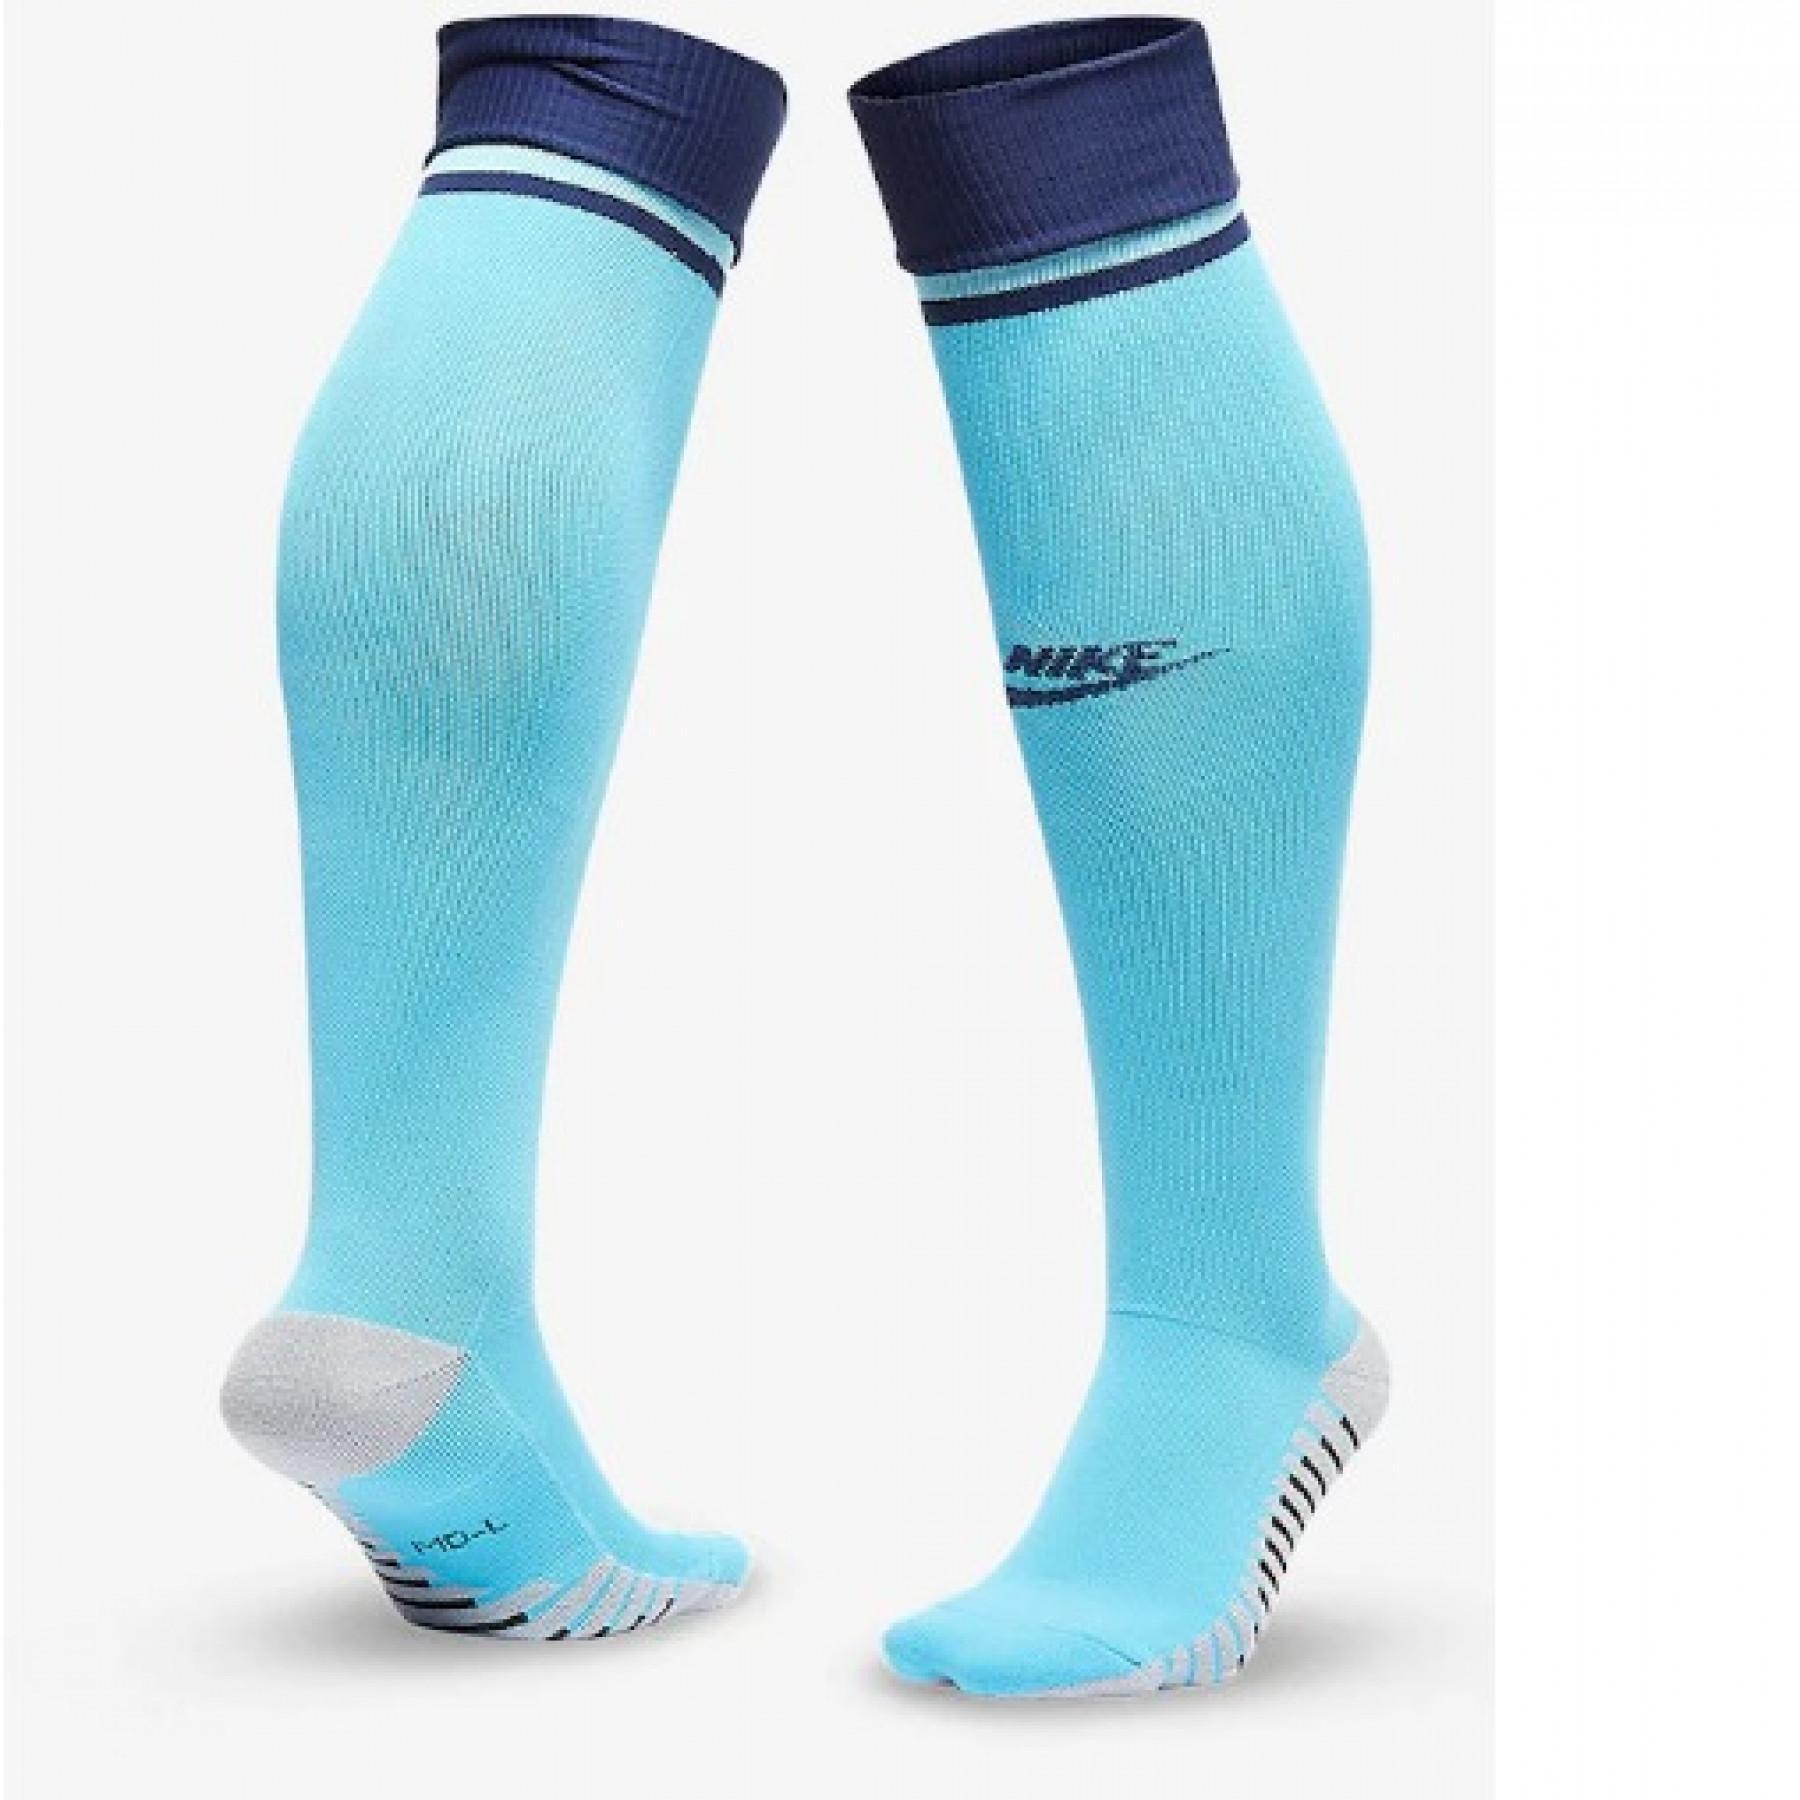 tottenham third socks 2019/20